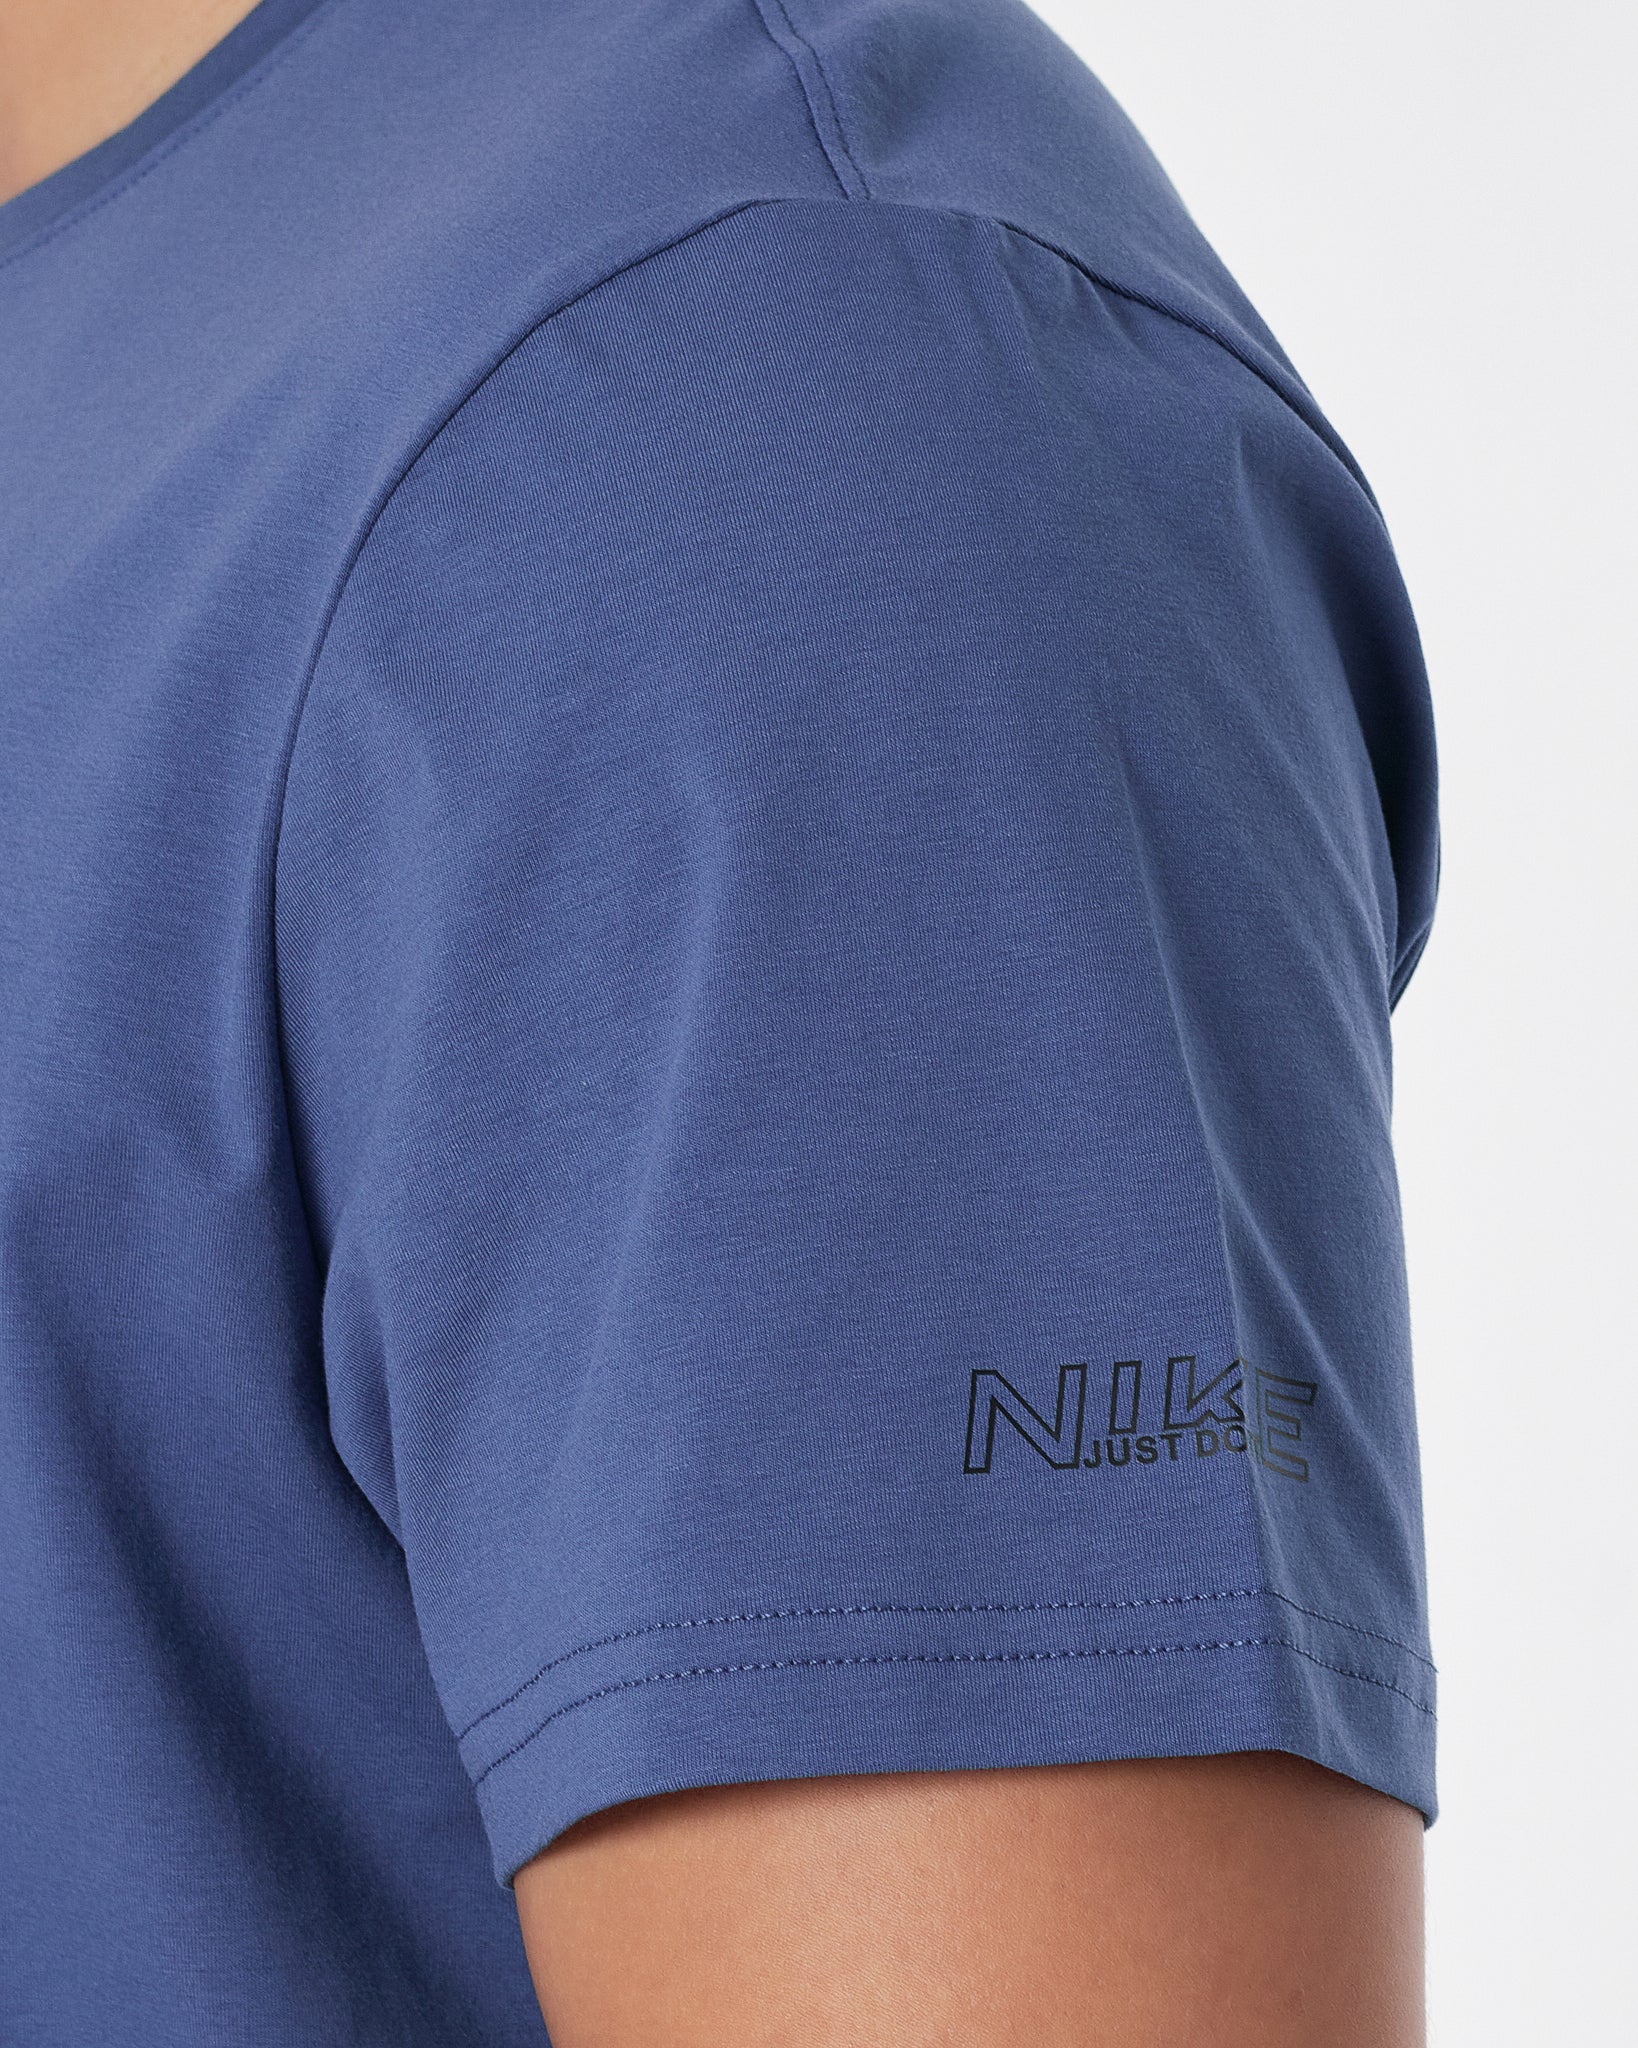 NIK Just Do It Logo Ptinted Men Blue T-Shirt 13.90